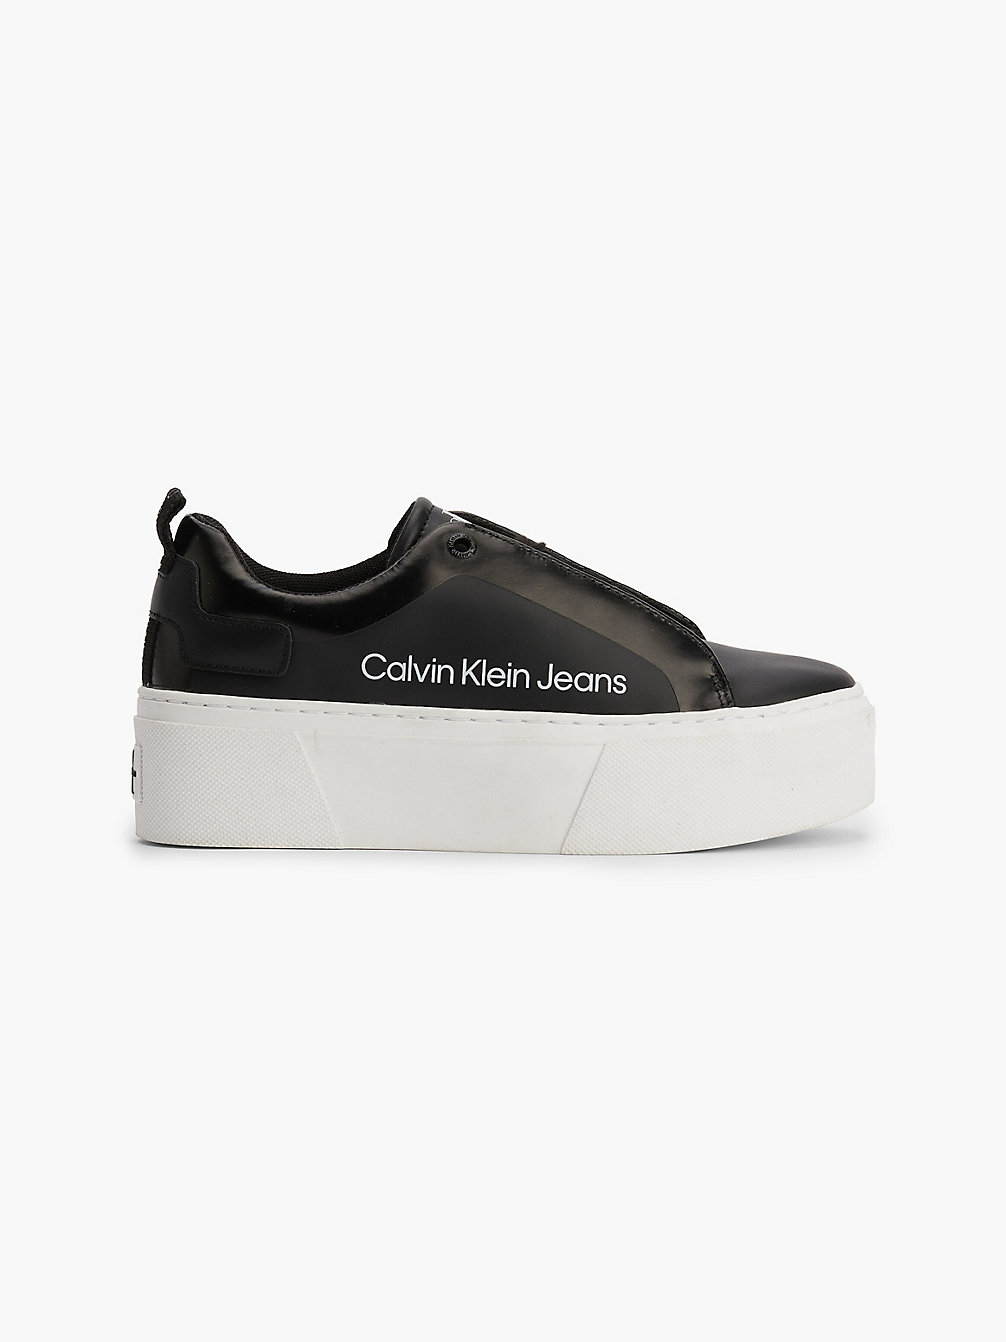 BLACK > Skórzane Buty Sportowe Na Platformie > undefined Kobiety - Calvin Klein